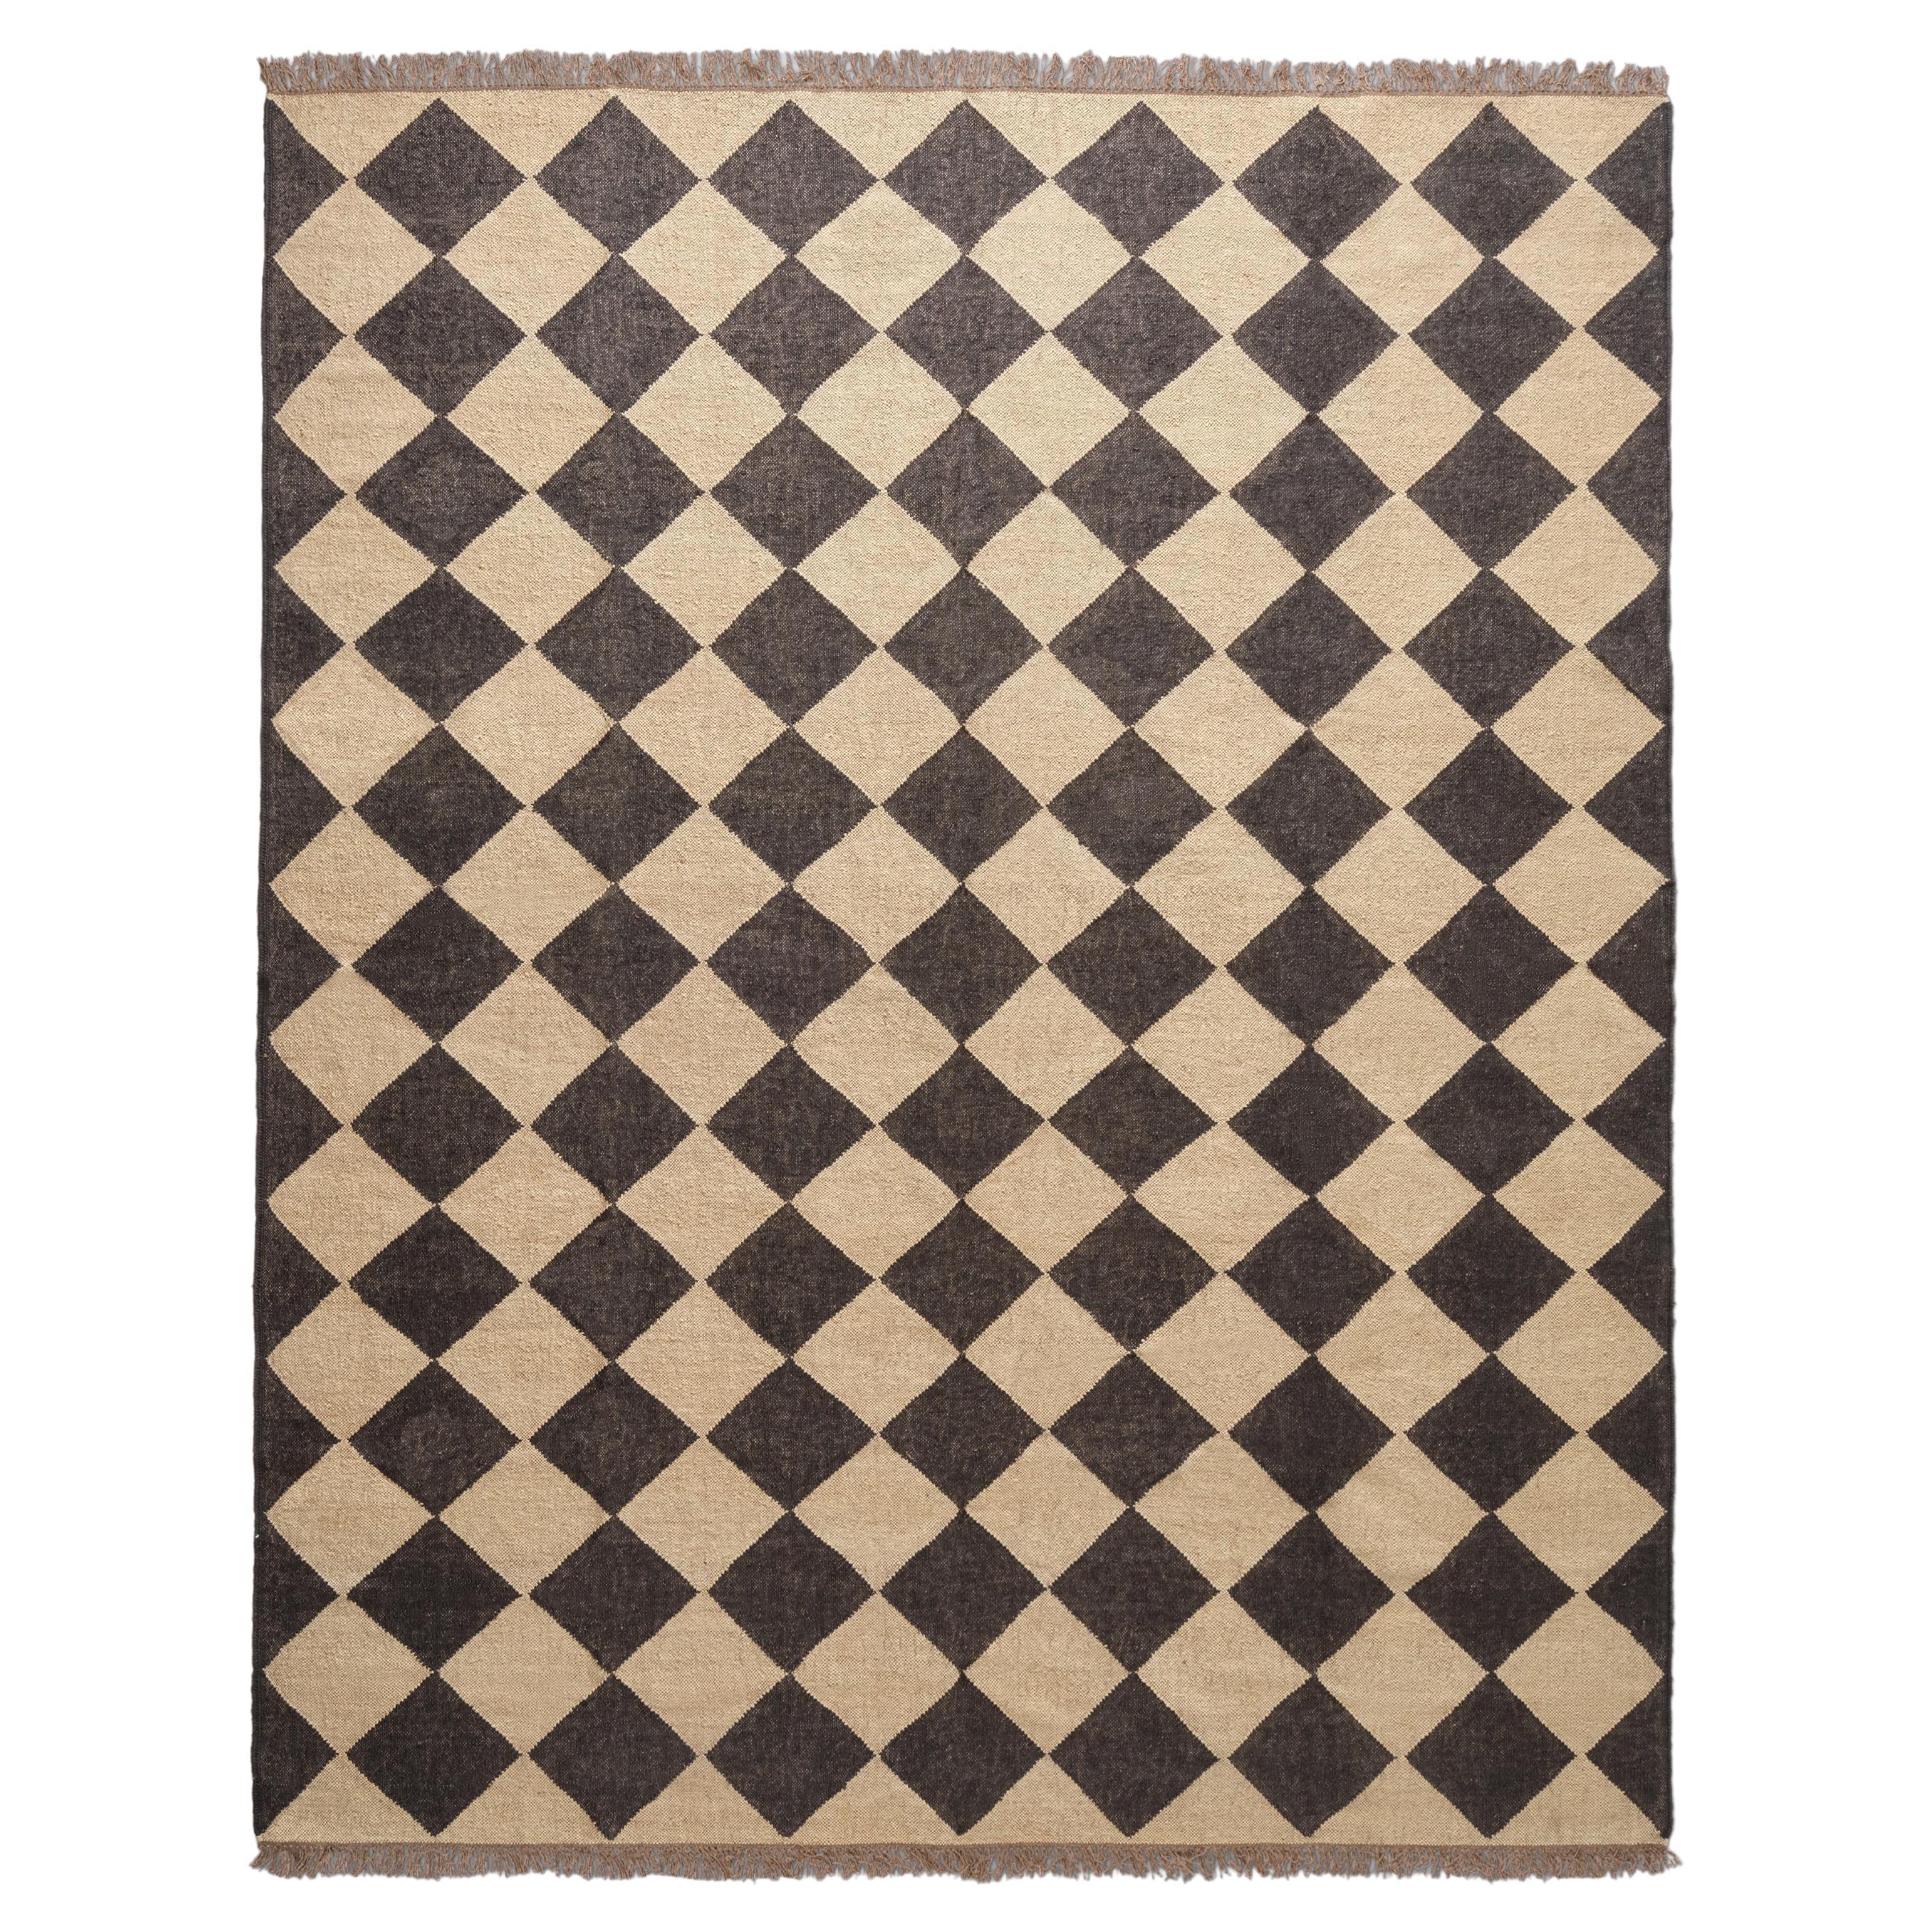 The Forsyth Checkerboard Rug - Diamond Checks in Off Black, 6x9 For Sale